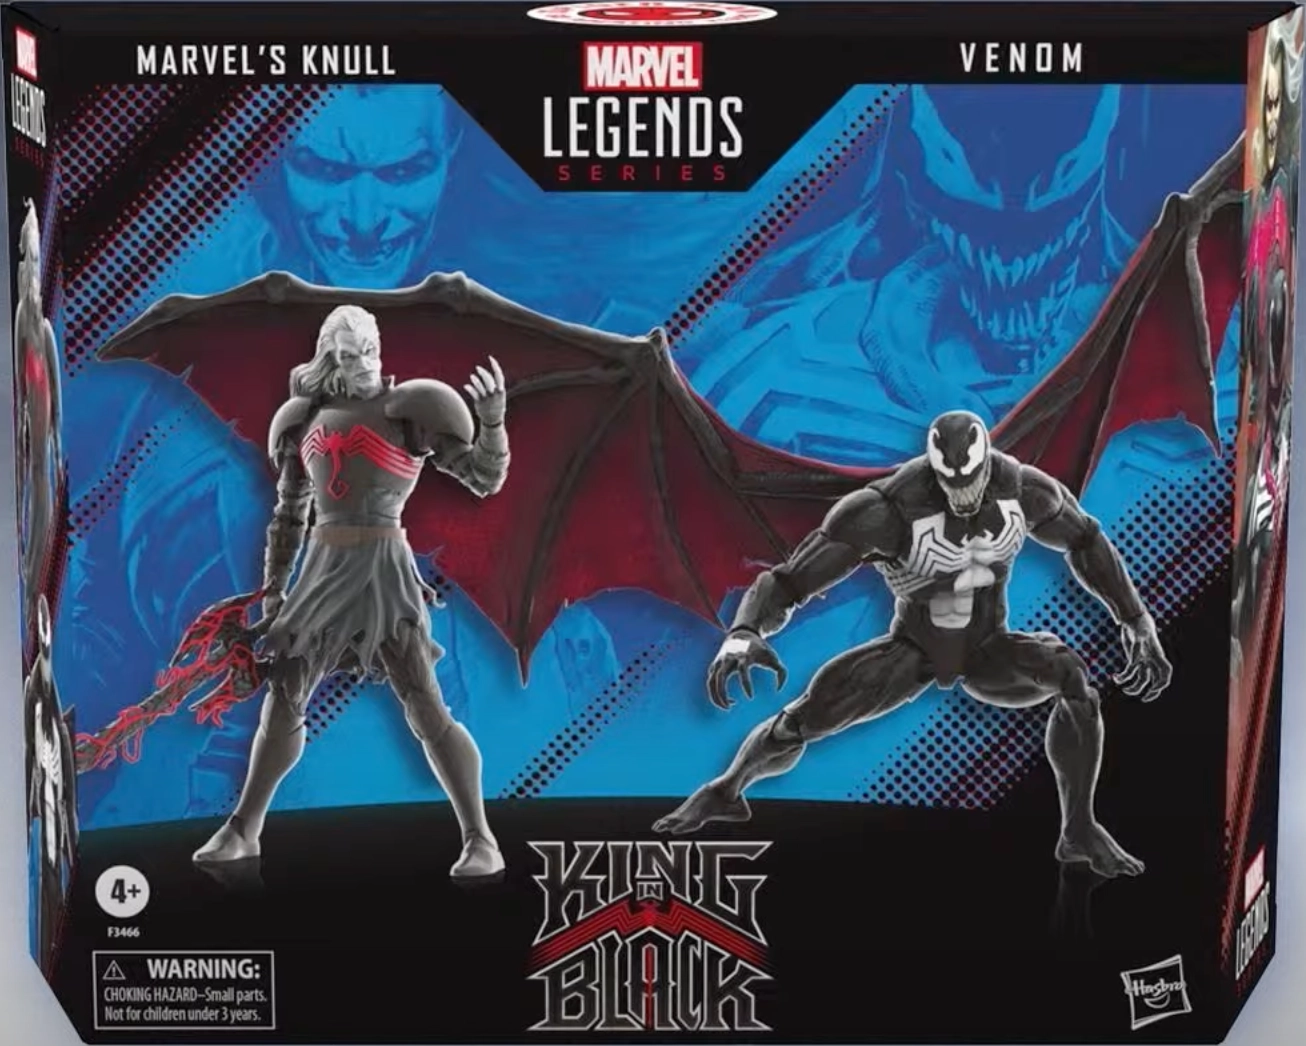 King in Black & Winged Venom figures Two-pack set